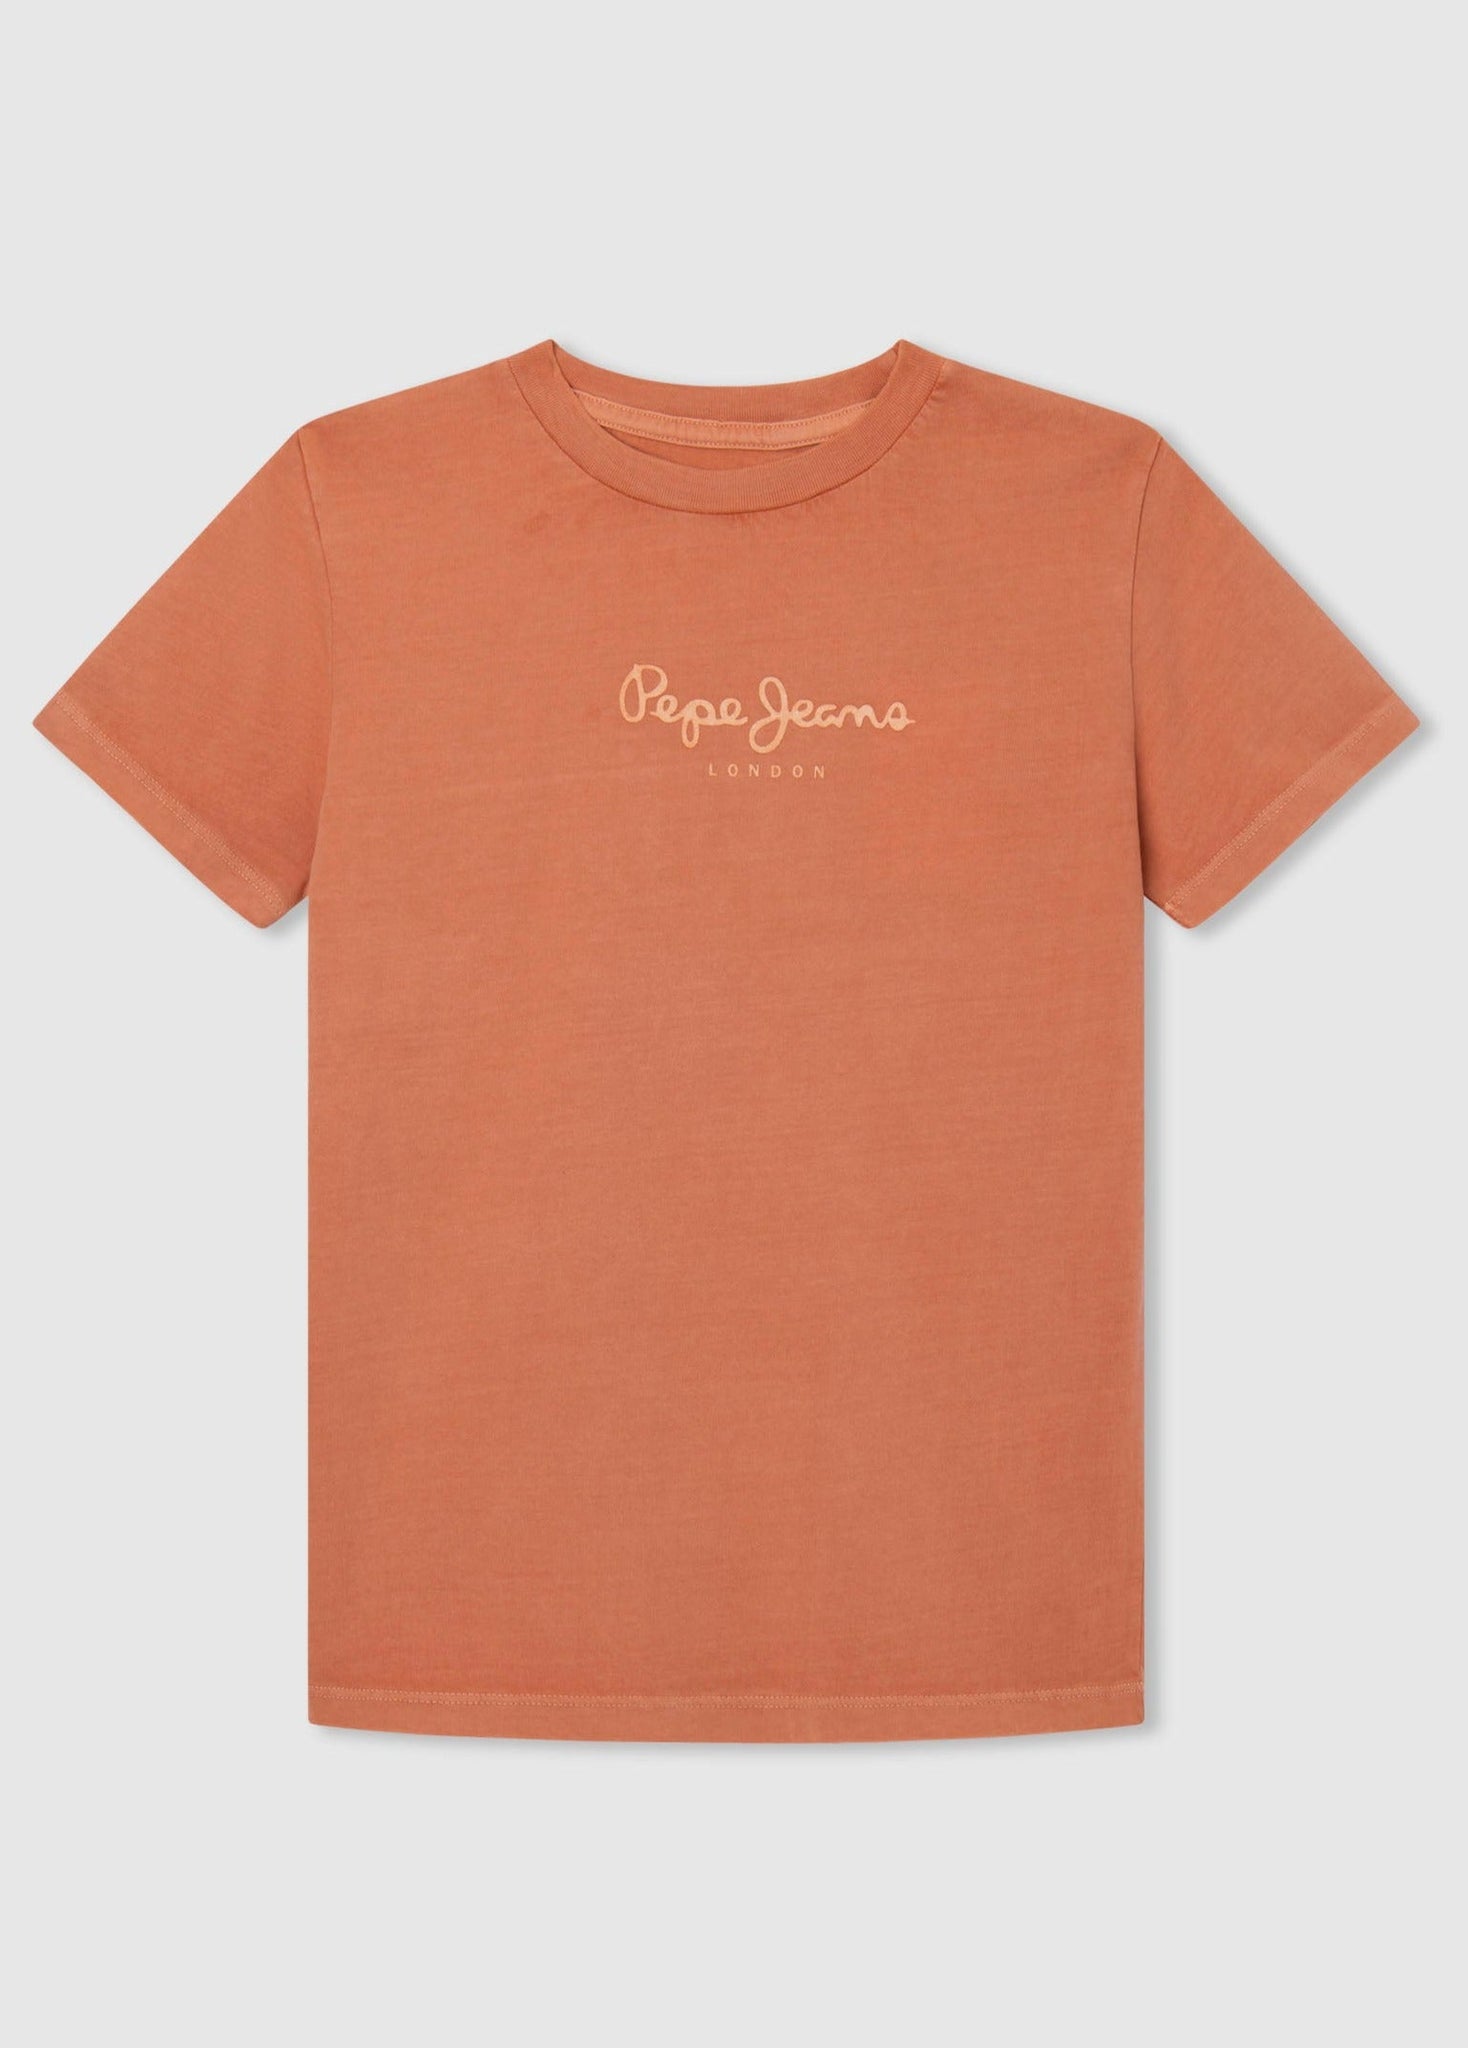 Pepe Jeans PB503535-145 Koszulka WEST SIR JR N chłopak kolor pomarańczowa